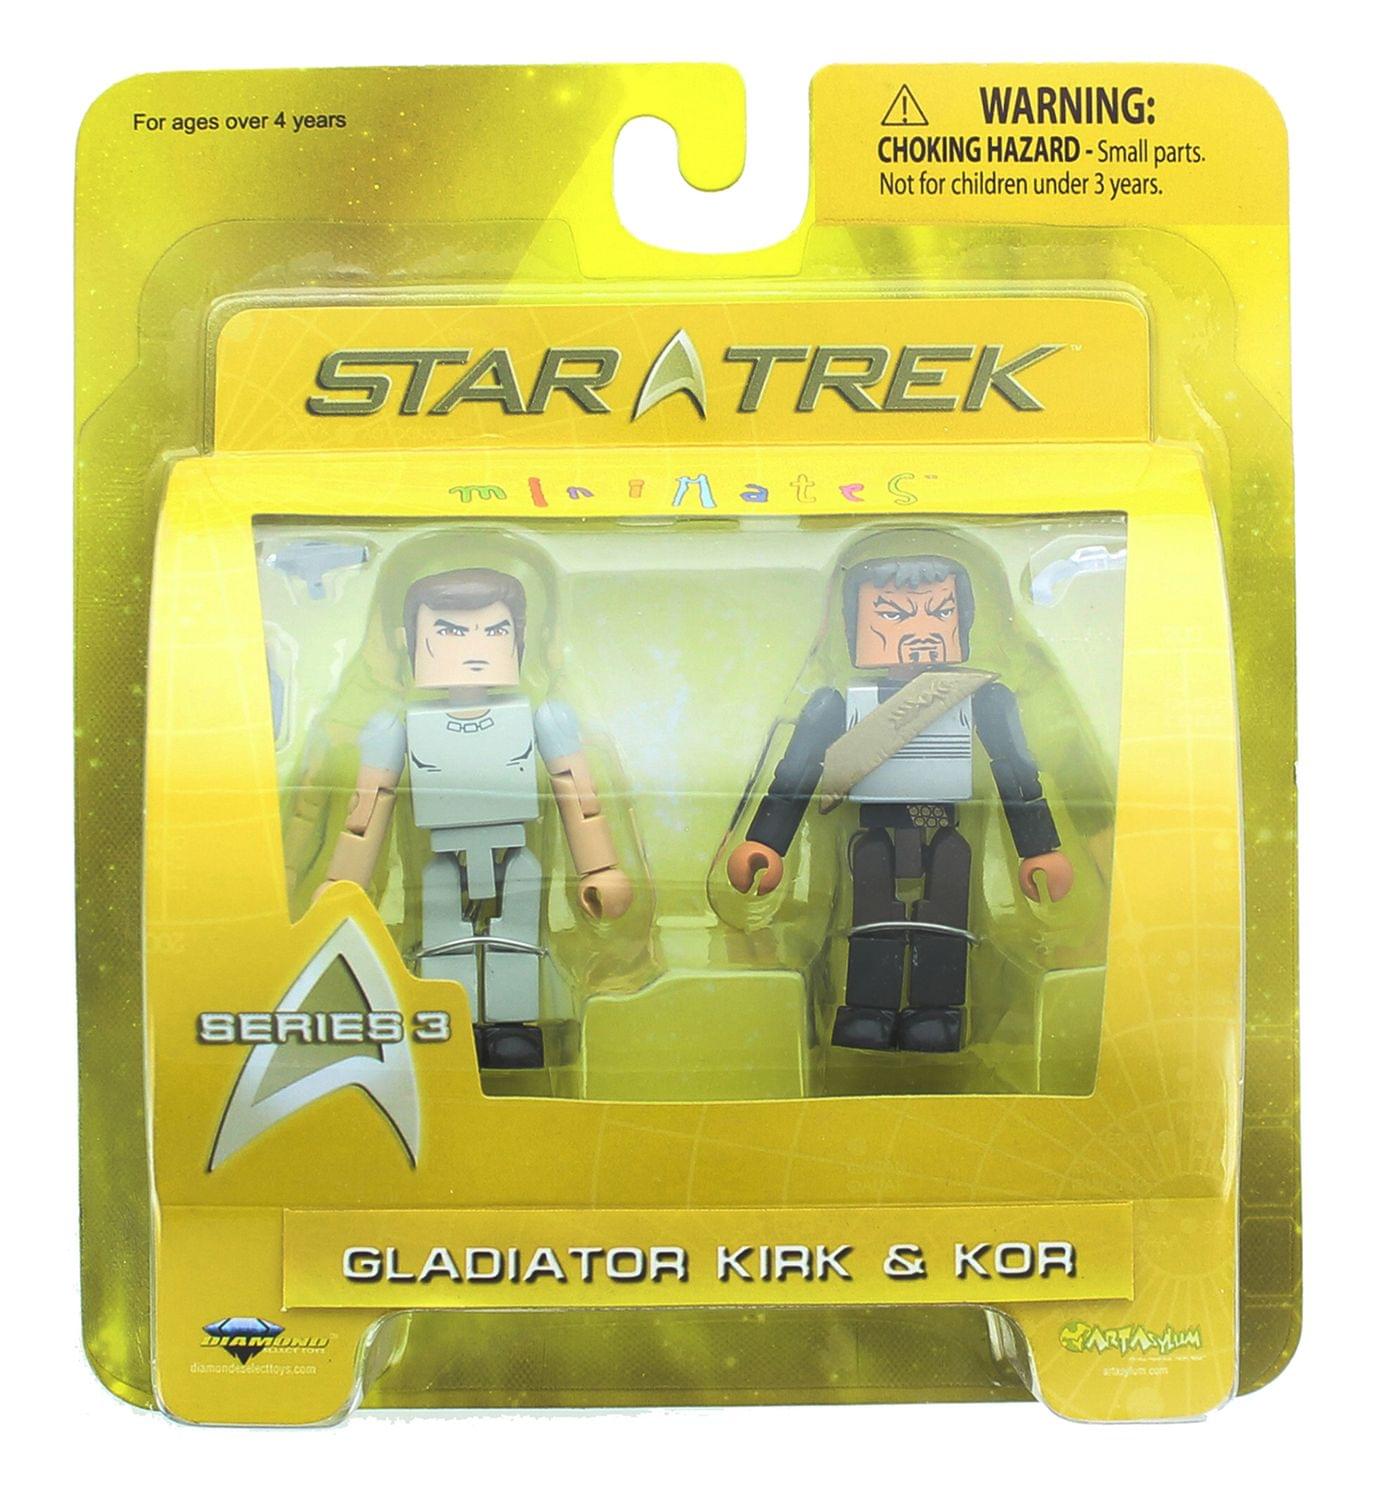 Star Trek Minimates Figure 2 Pack - Gladiator Kirk & Kor The Klingon